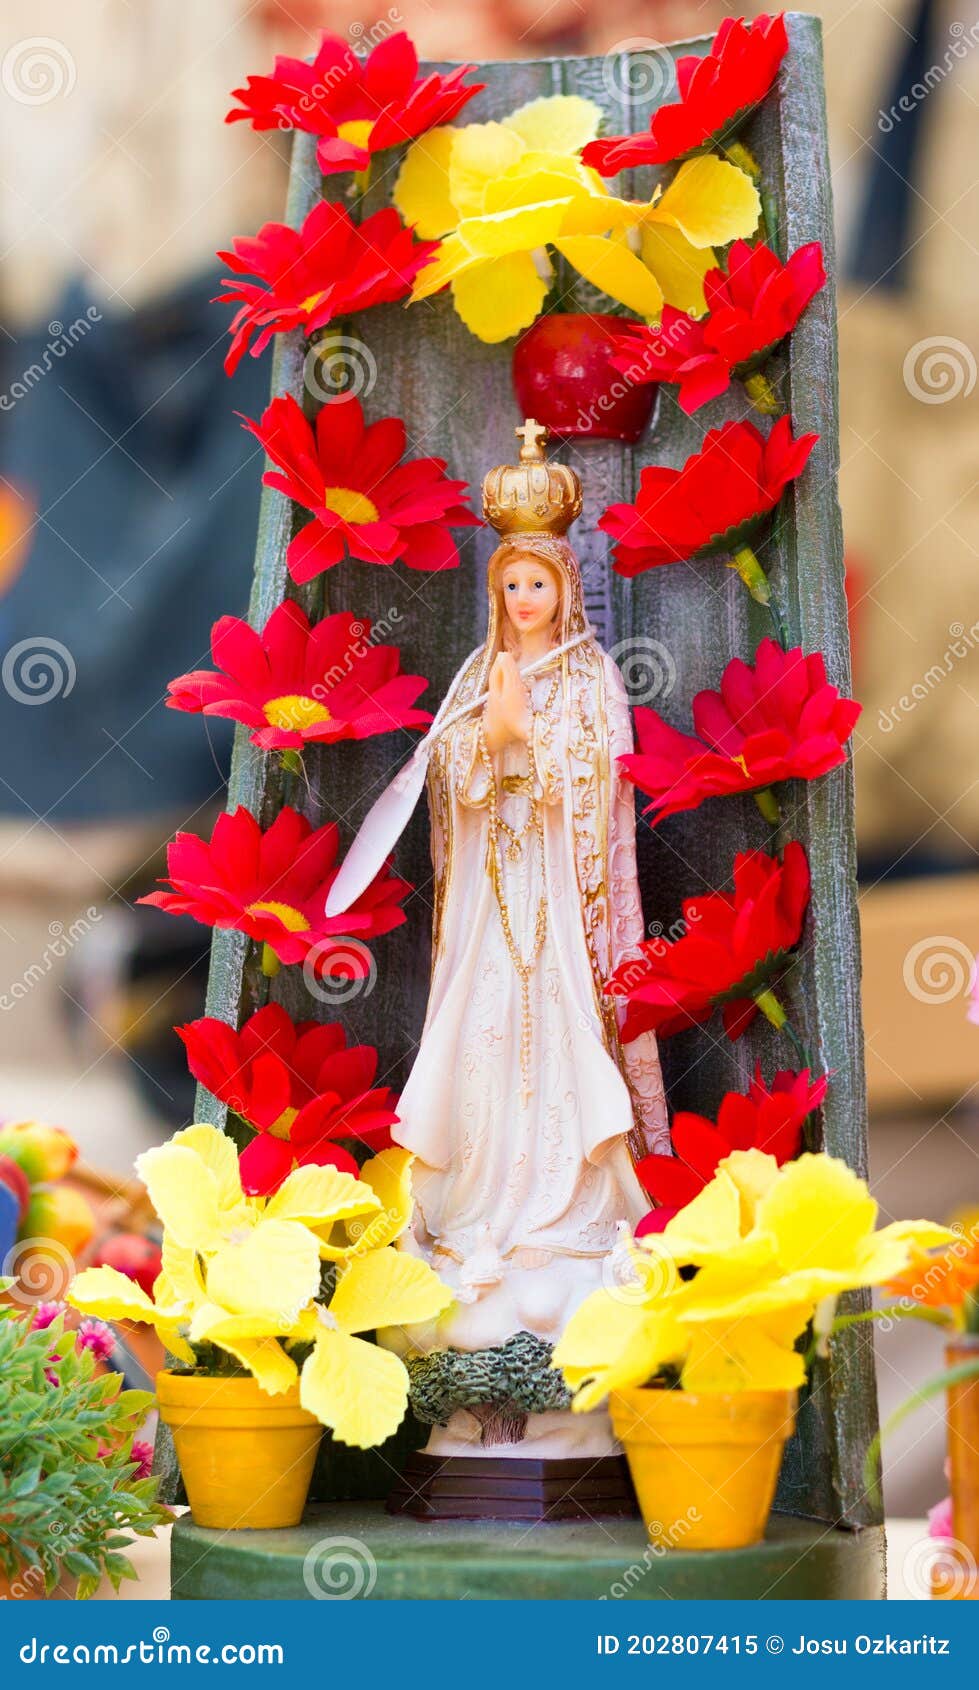 158 Virgin Mary Figure Flowers Stock Photos - Free & Royalty-Free ...